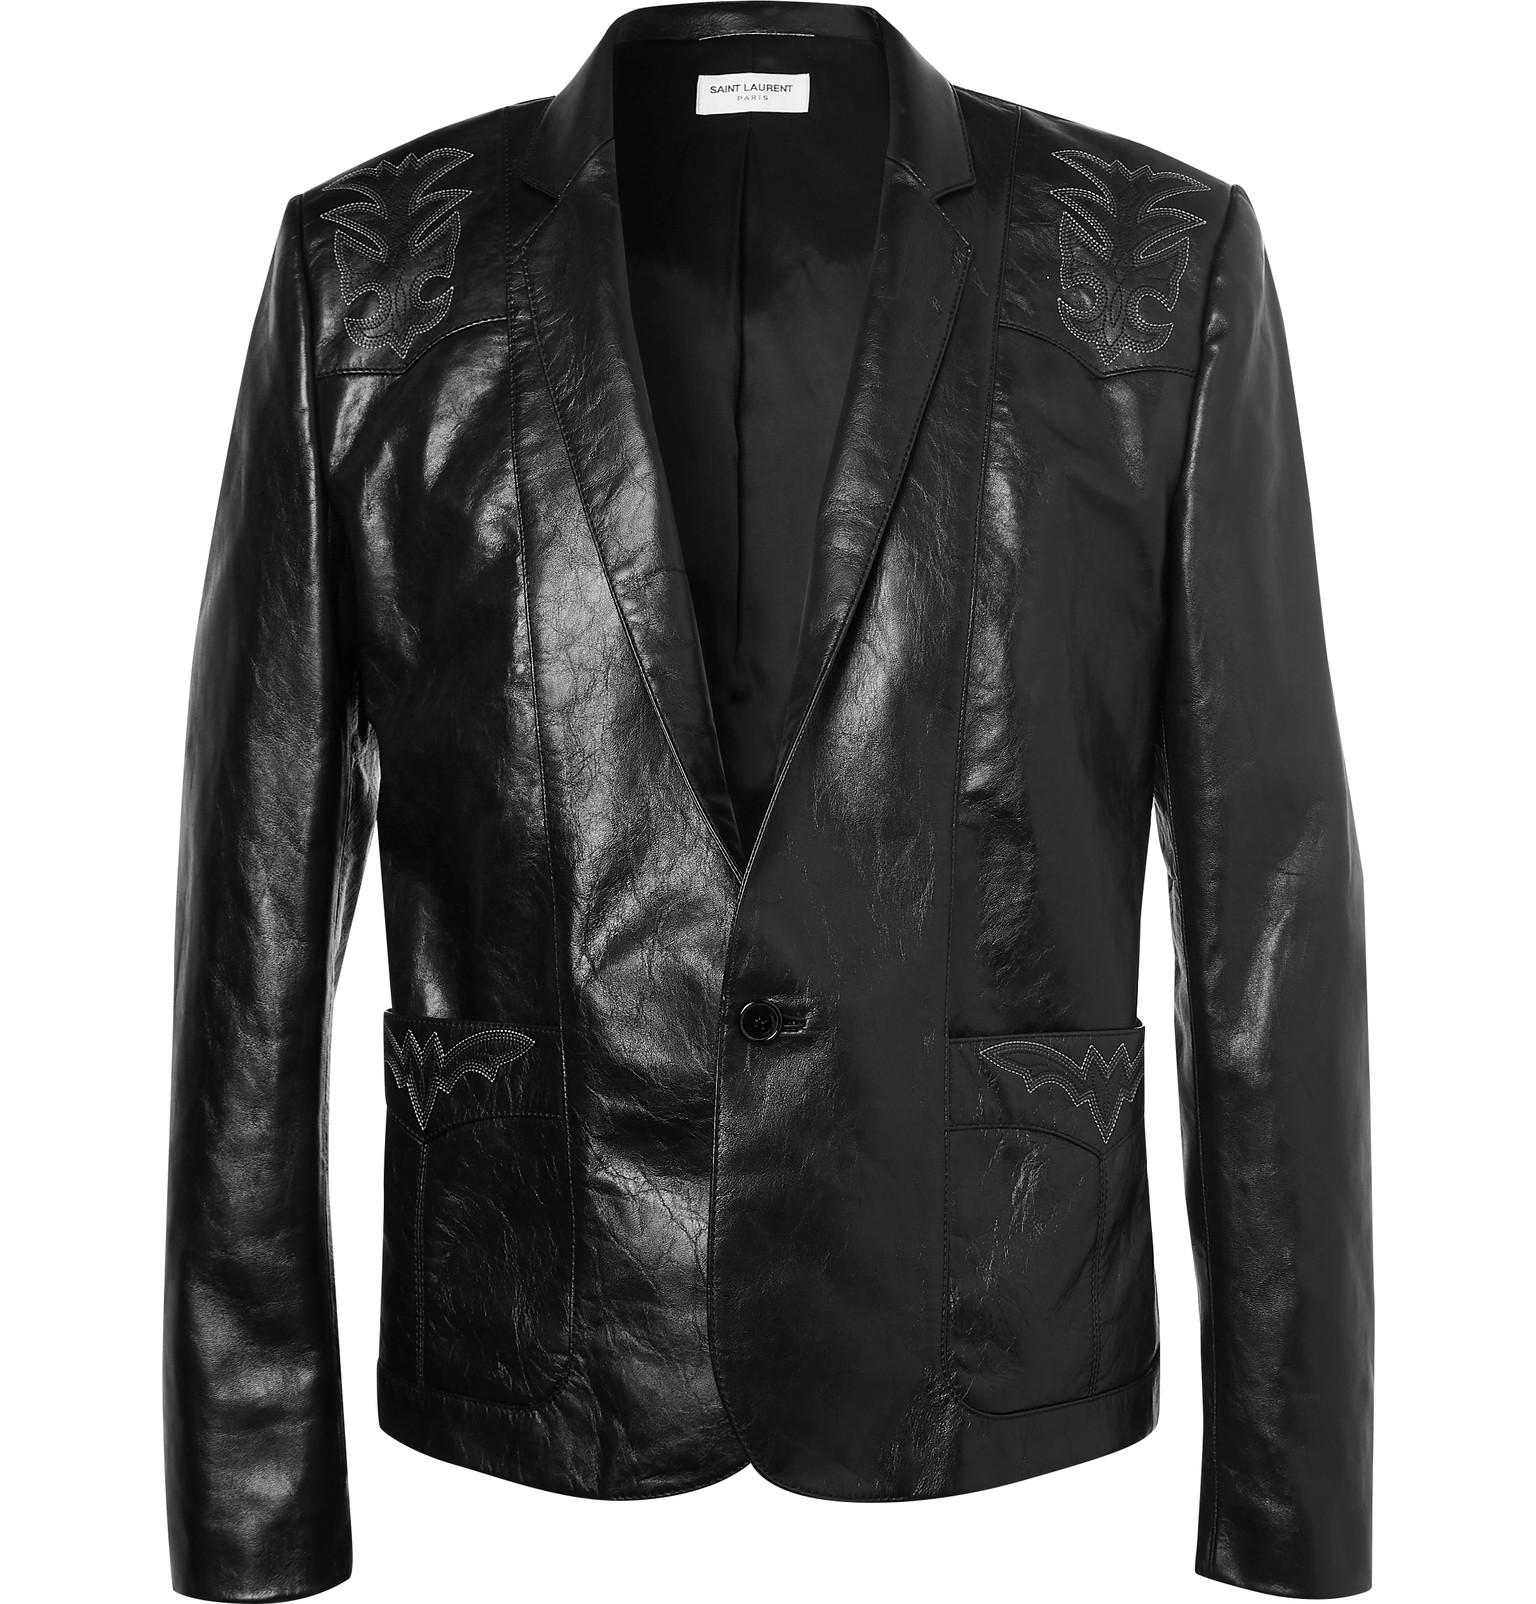 SAINT LAURENT - Embroidered Leather Jacket - Men - Black | The Fashionisto